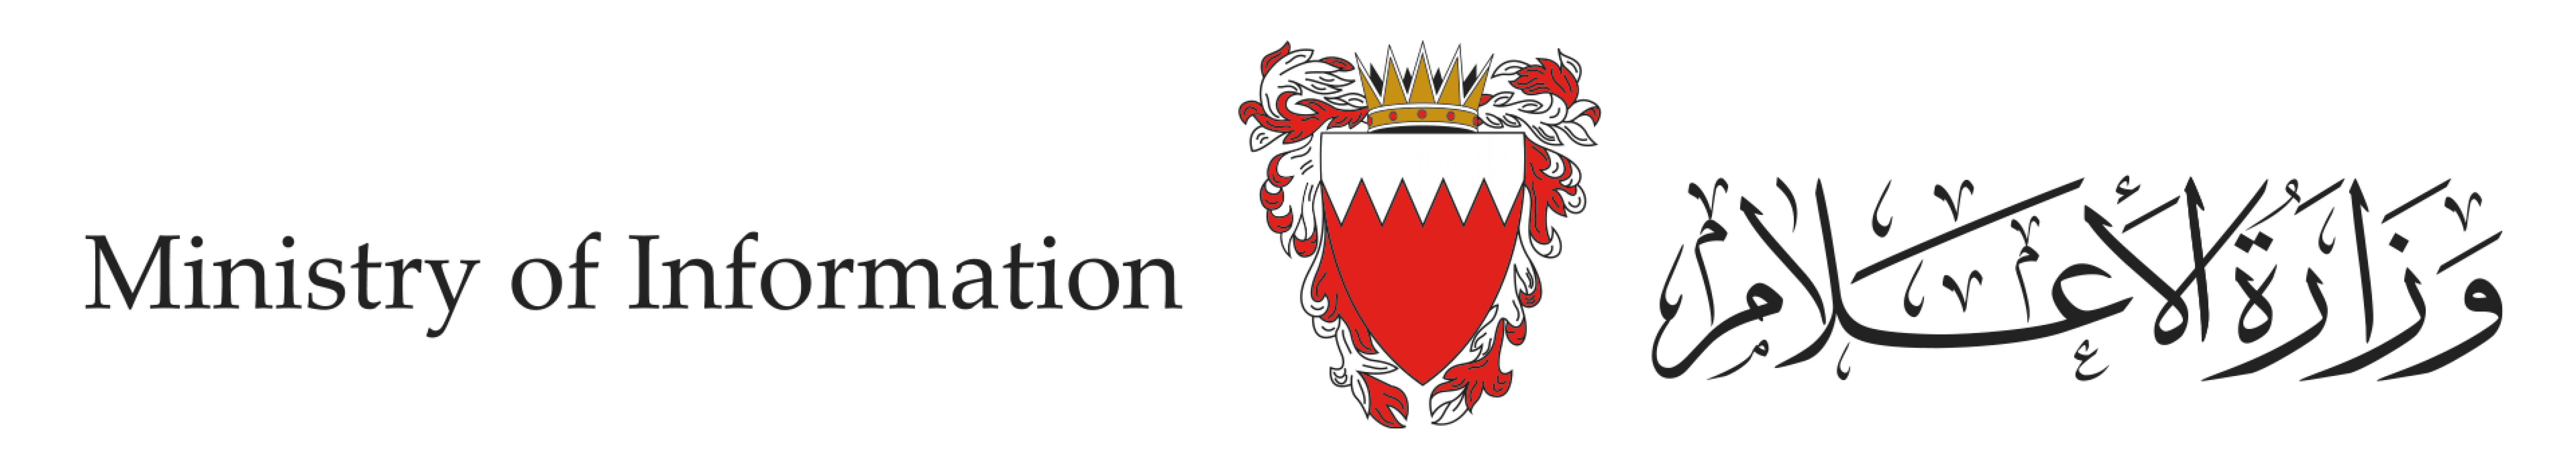 Ministry of Information | وزارة الاعلام | Kingdom of Bahrain | مملكة البحرين